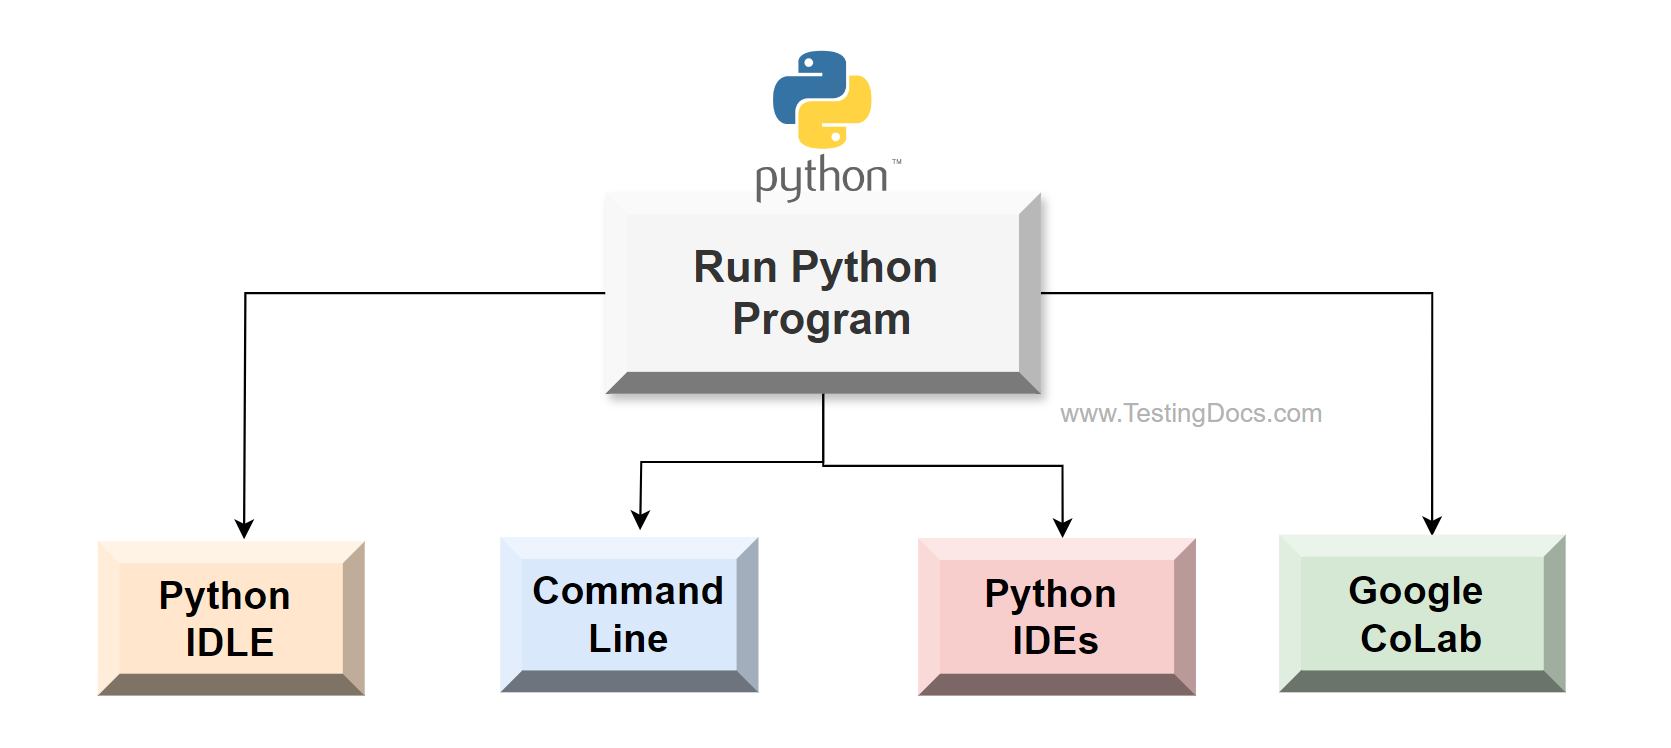 Run Python Program